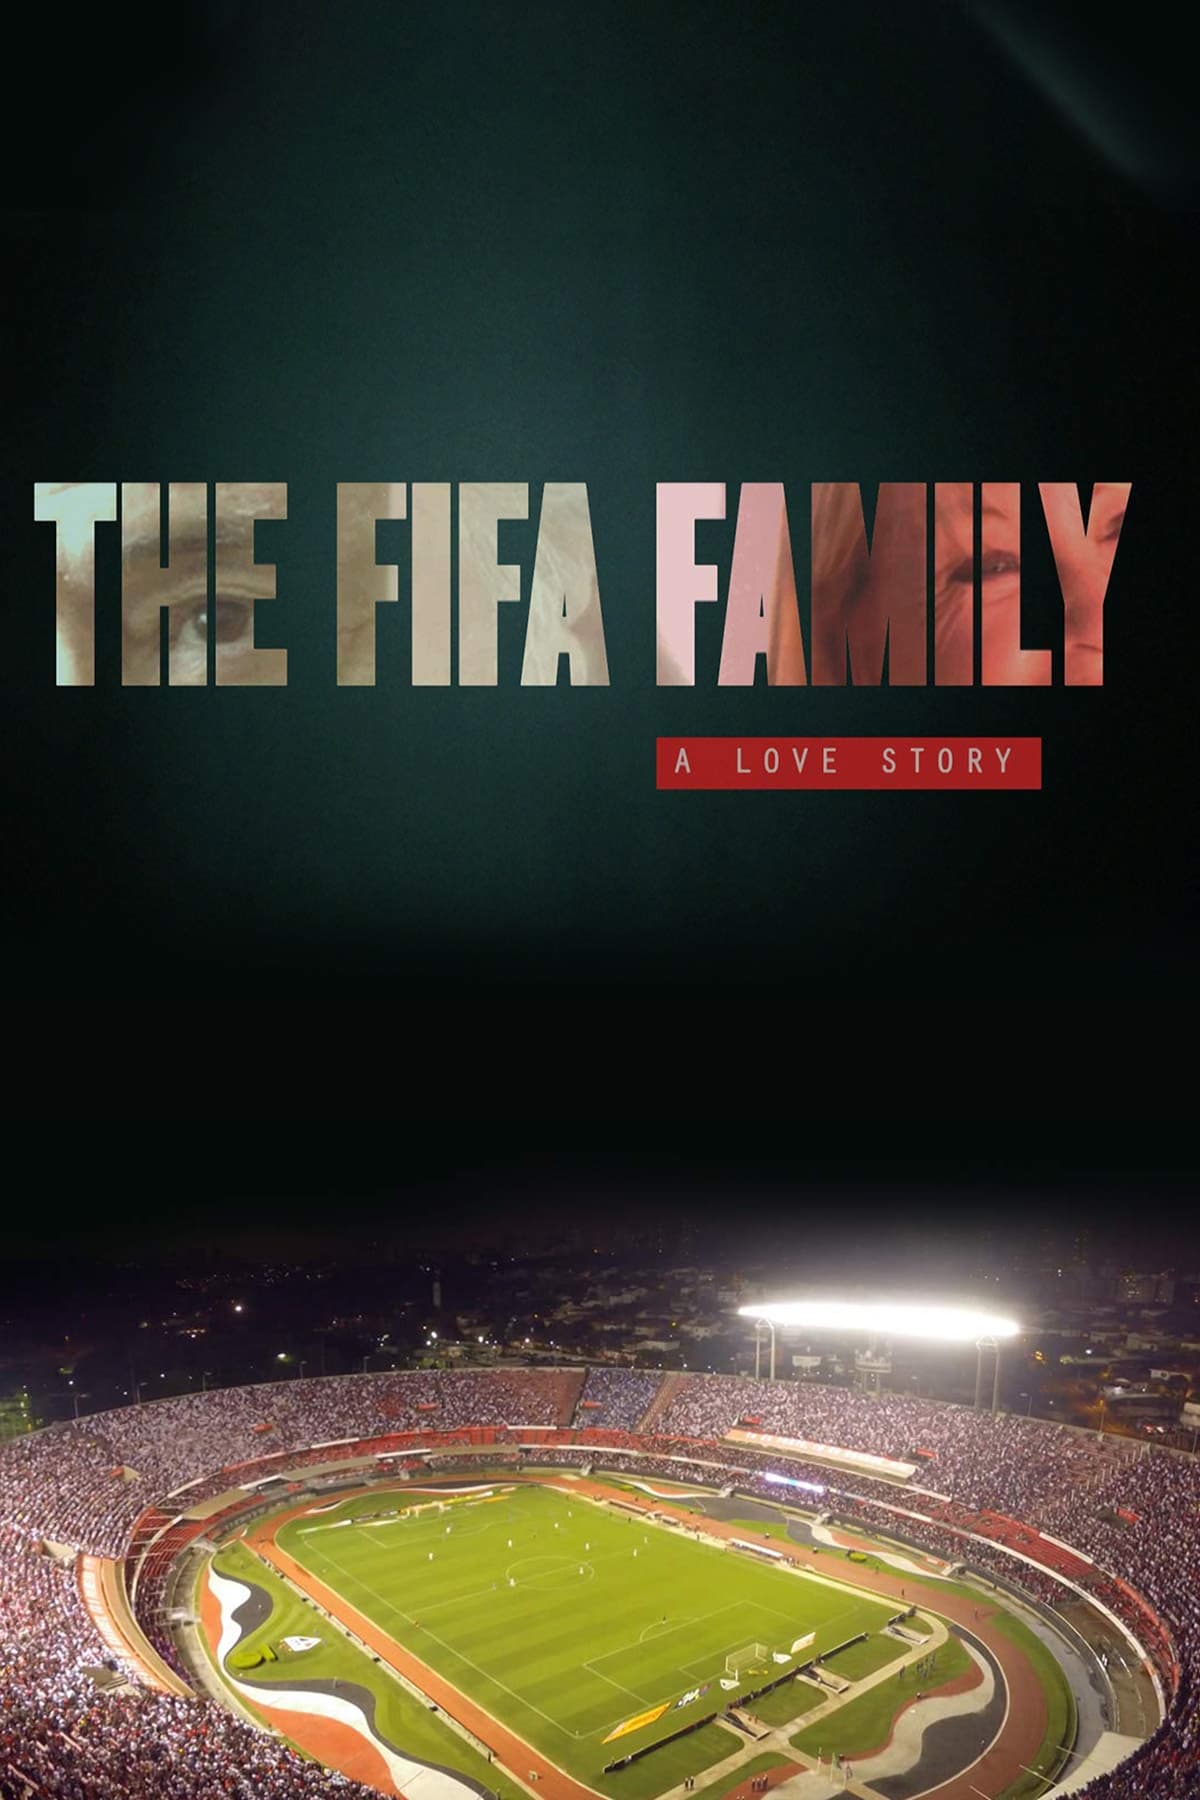 The FIFA Family: A Love Story